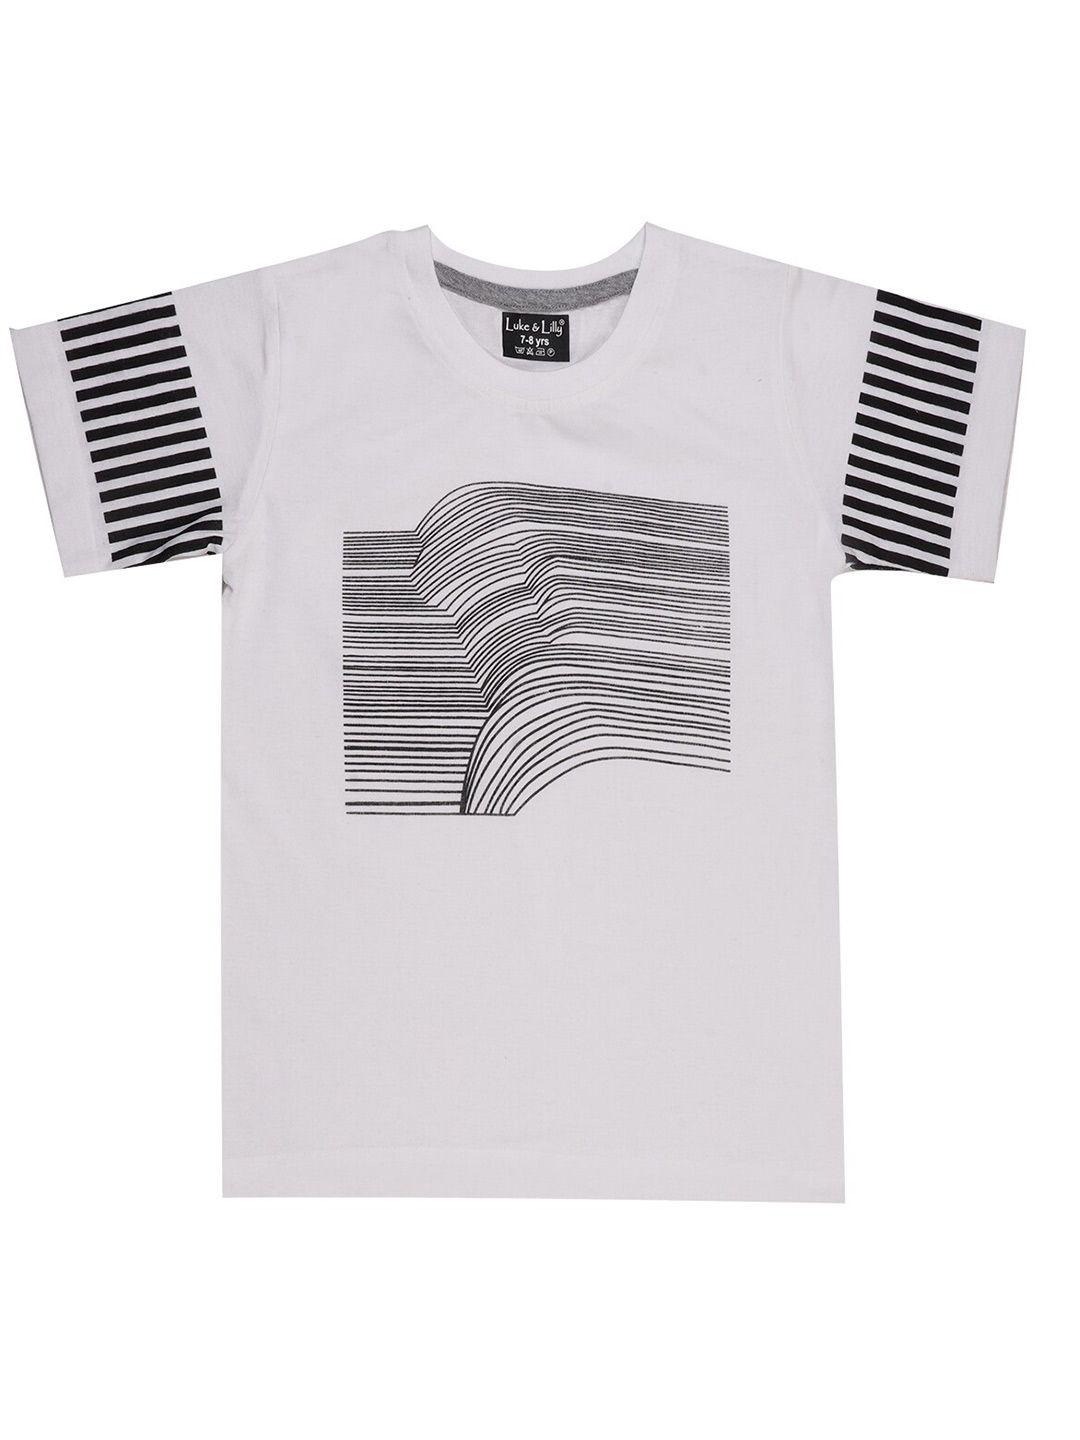 luke & lilly boys horizontal striped pure cotton t-shirt